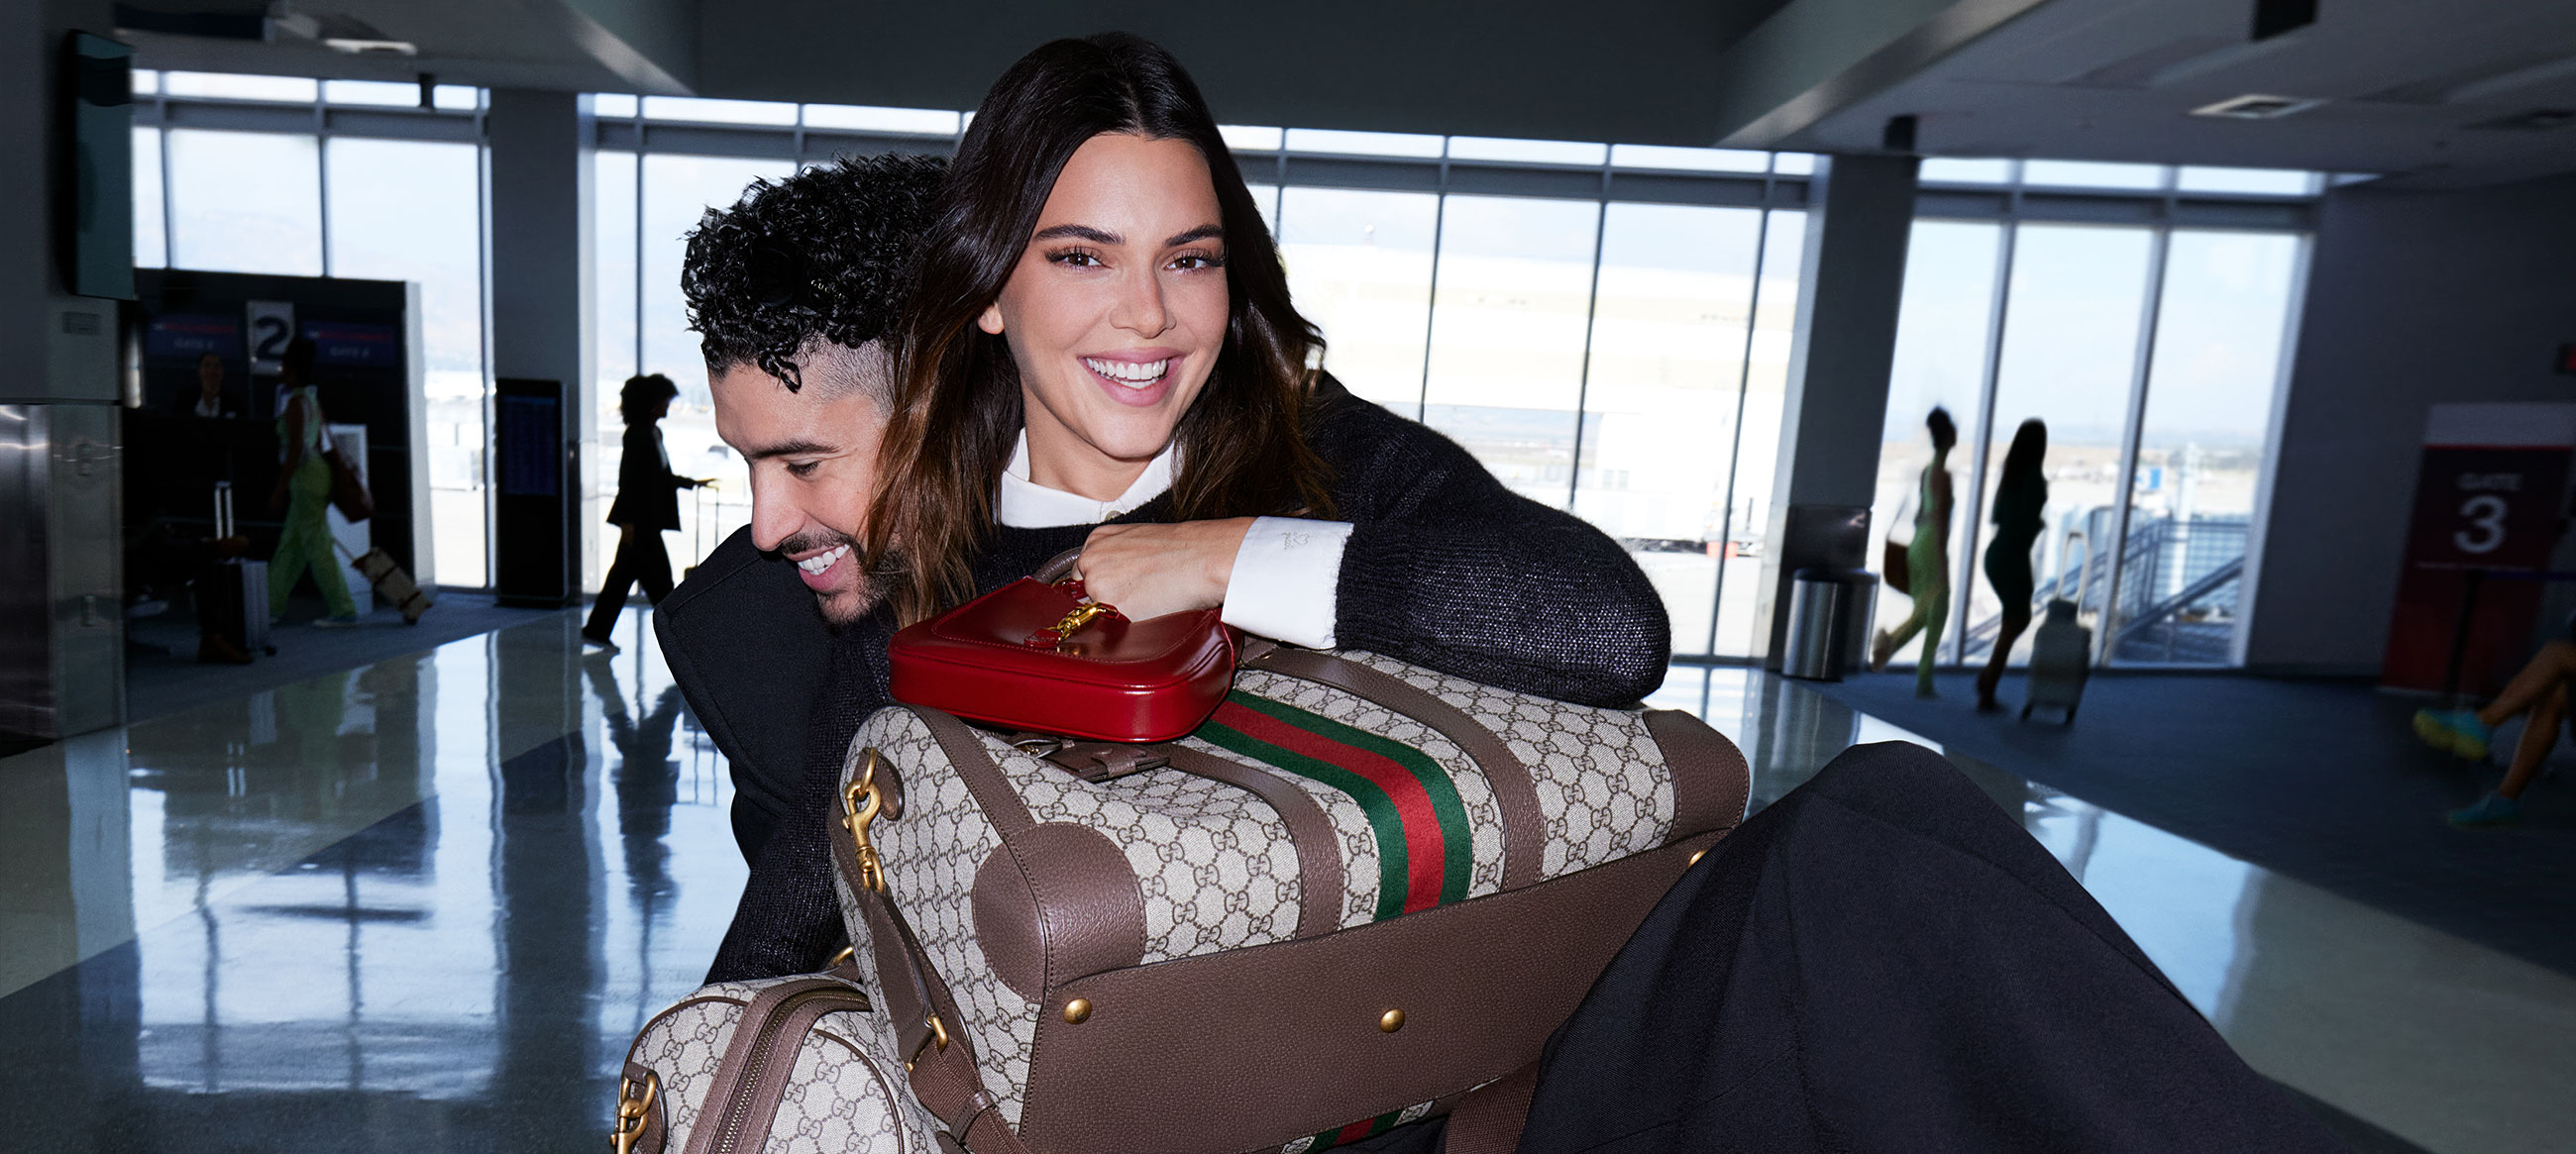 Louis Vuitton Monogram Handbags of Kendall Jenner on the Instagram account @ kendalljenner